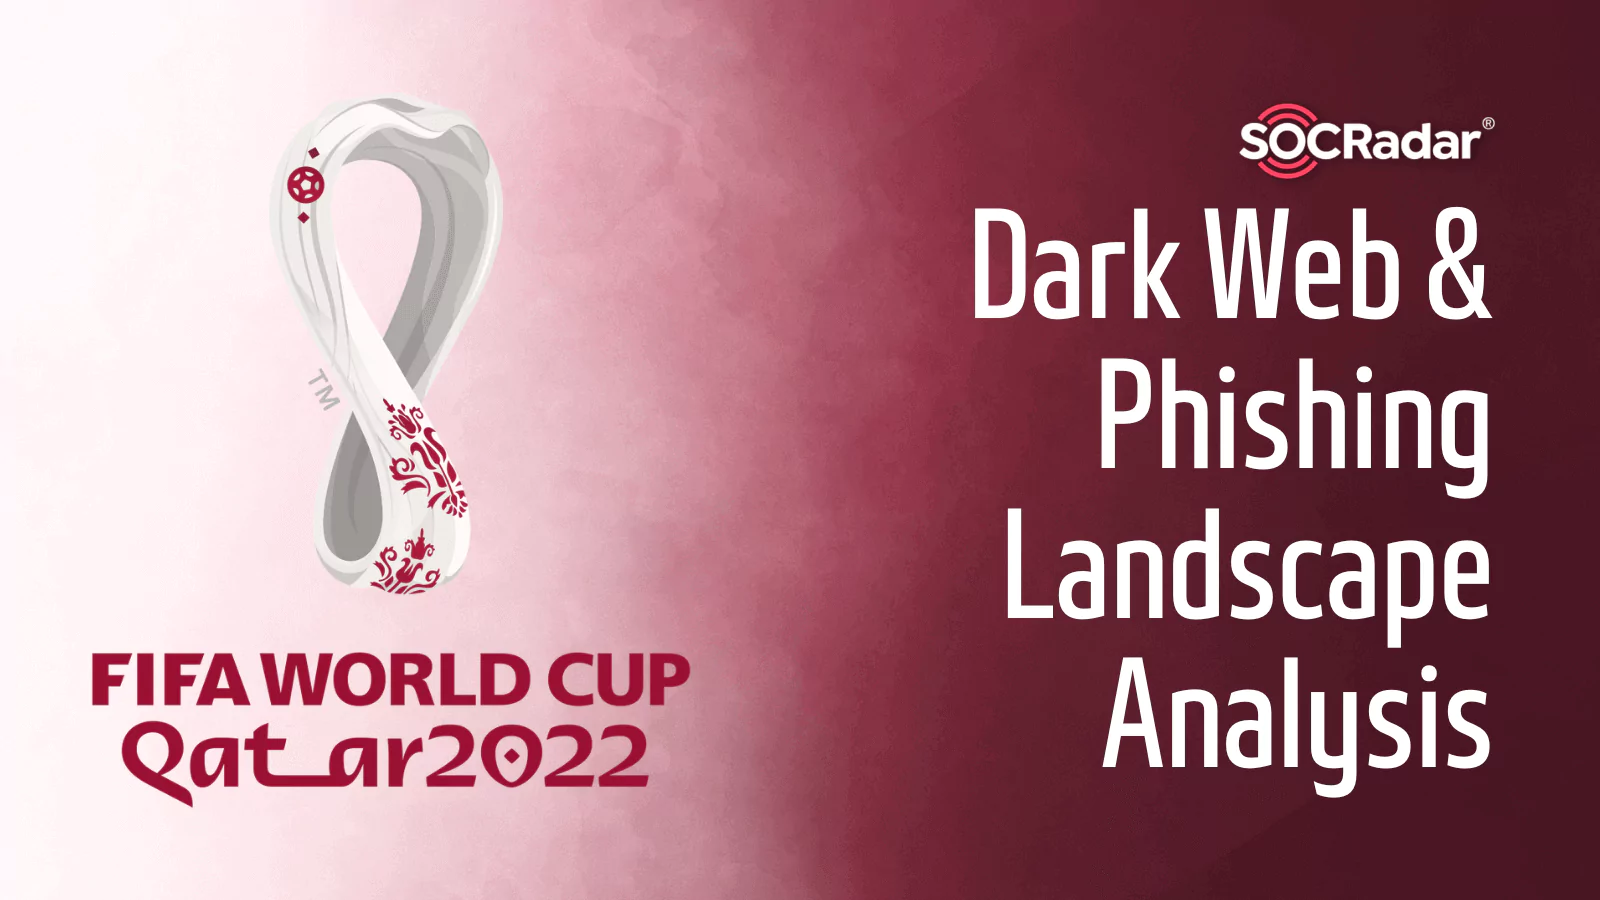 FIFA World Cup 2022 Qatar Dark Web and Phishing Landscape Analysis